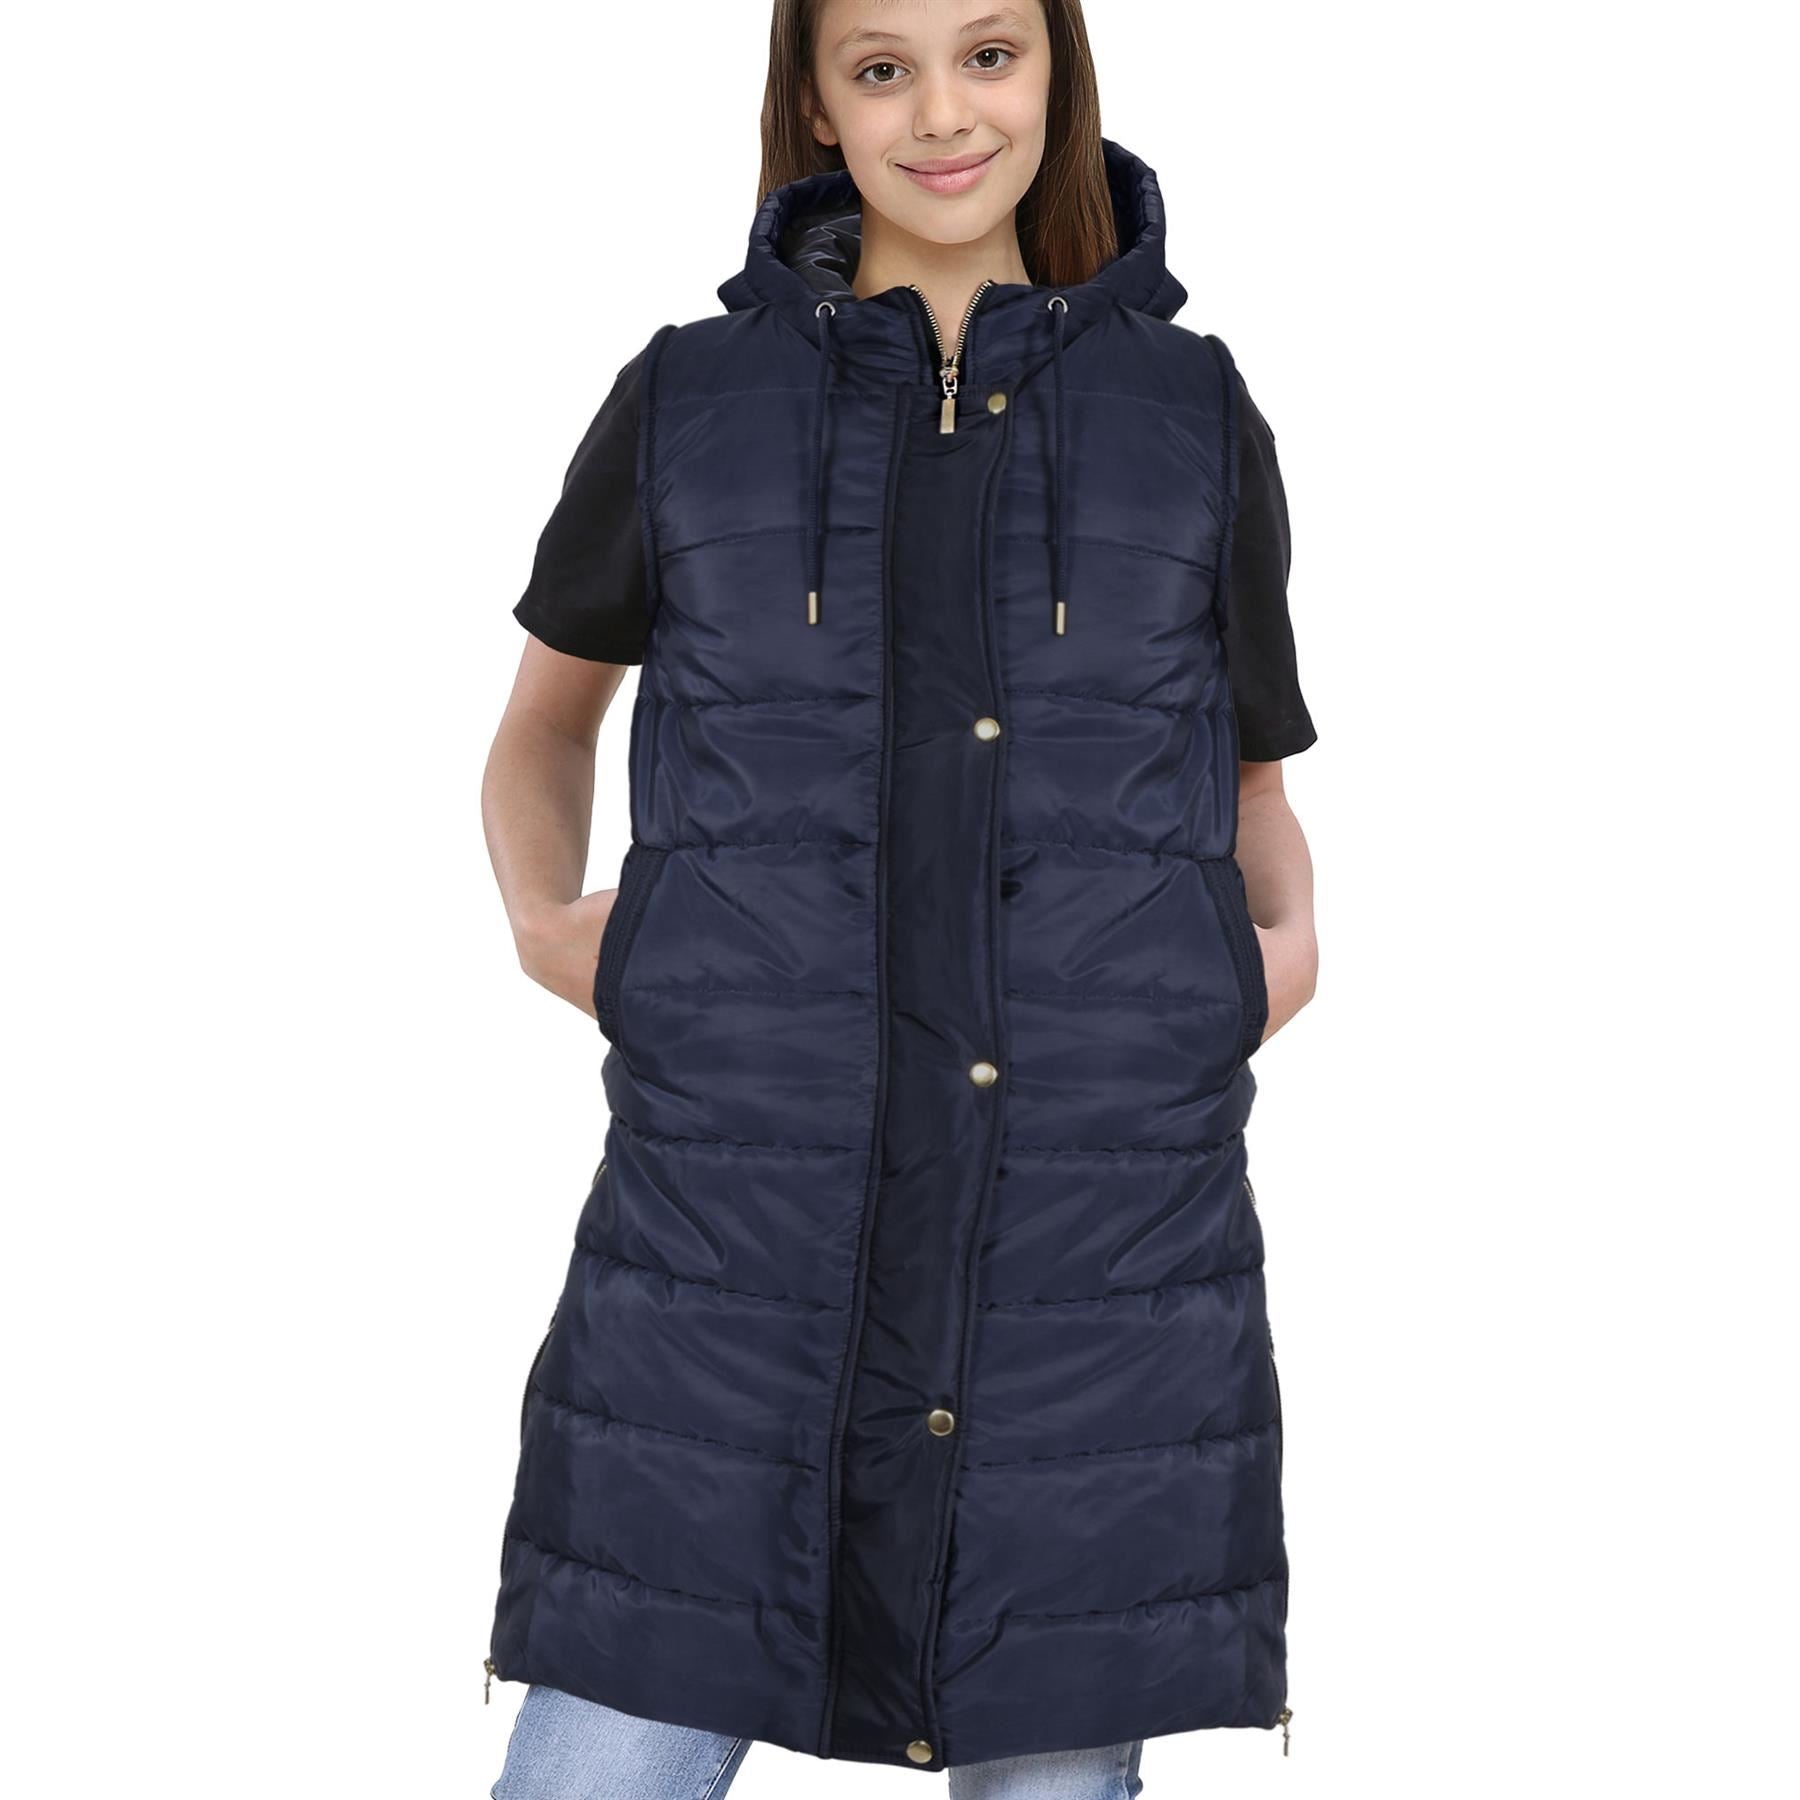 Kids Girls Oversized Gilet Long Line Style Navy Jacket